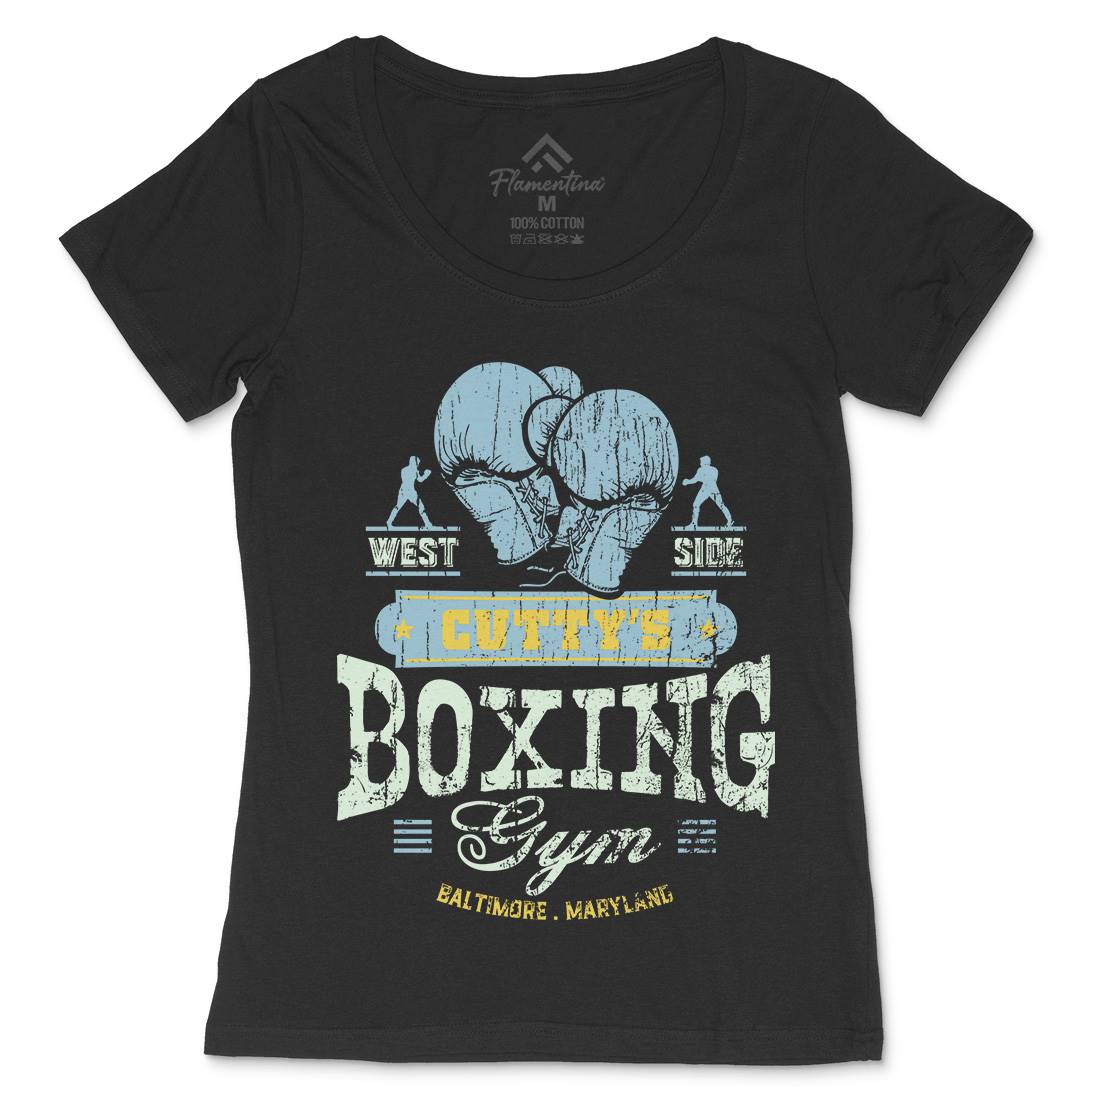 Cuttys Boxing Gym Womens Scoop Neck T-Shirt Sport D187